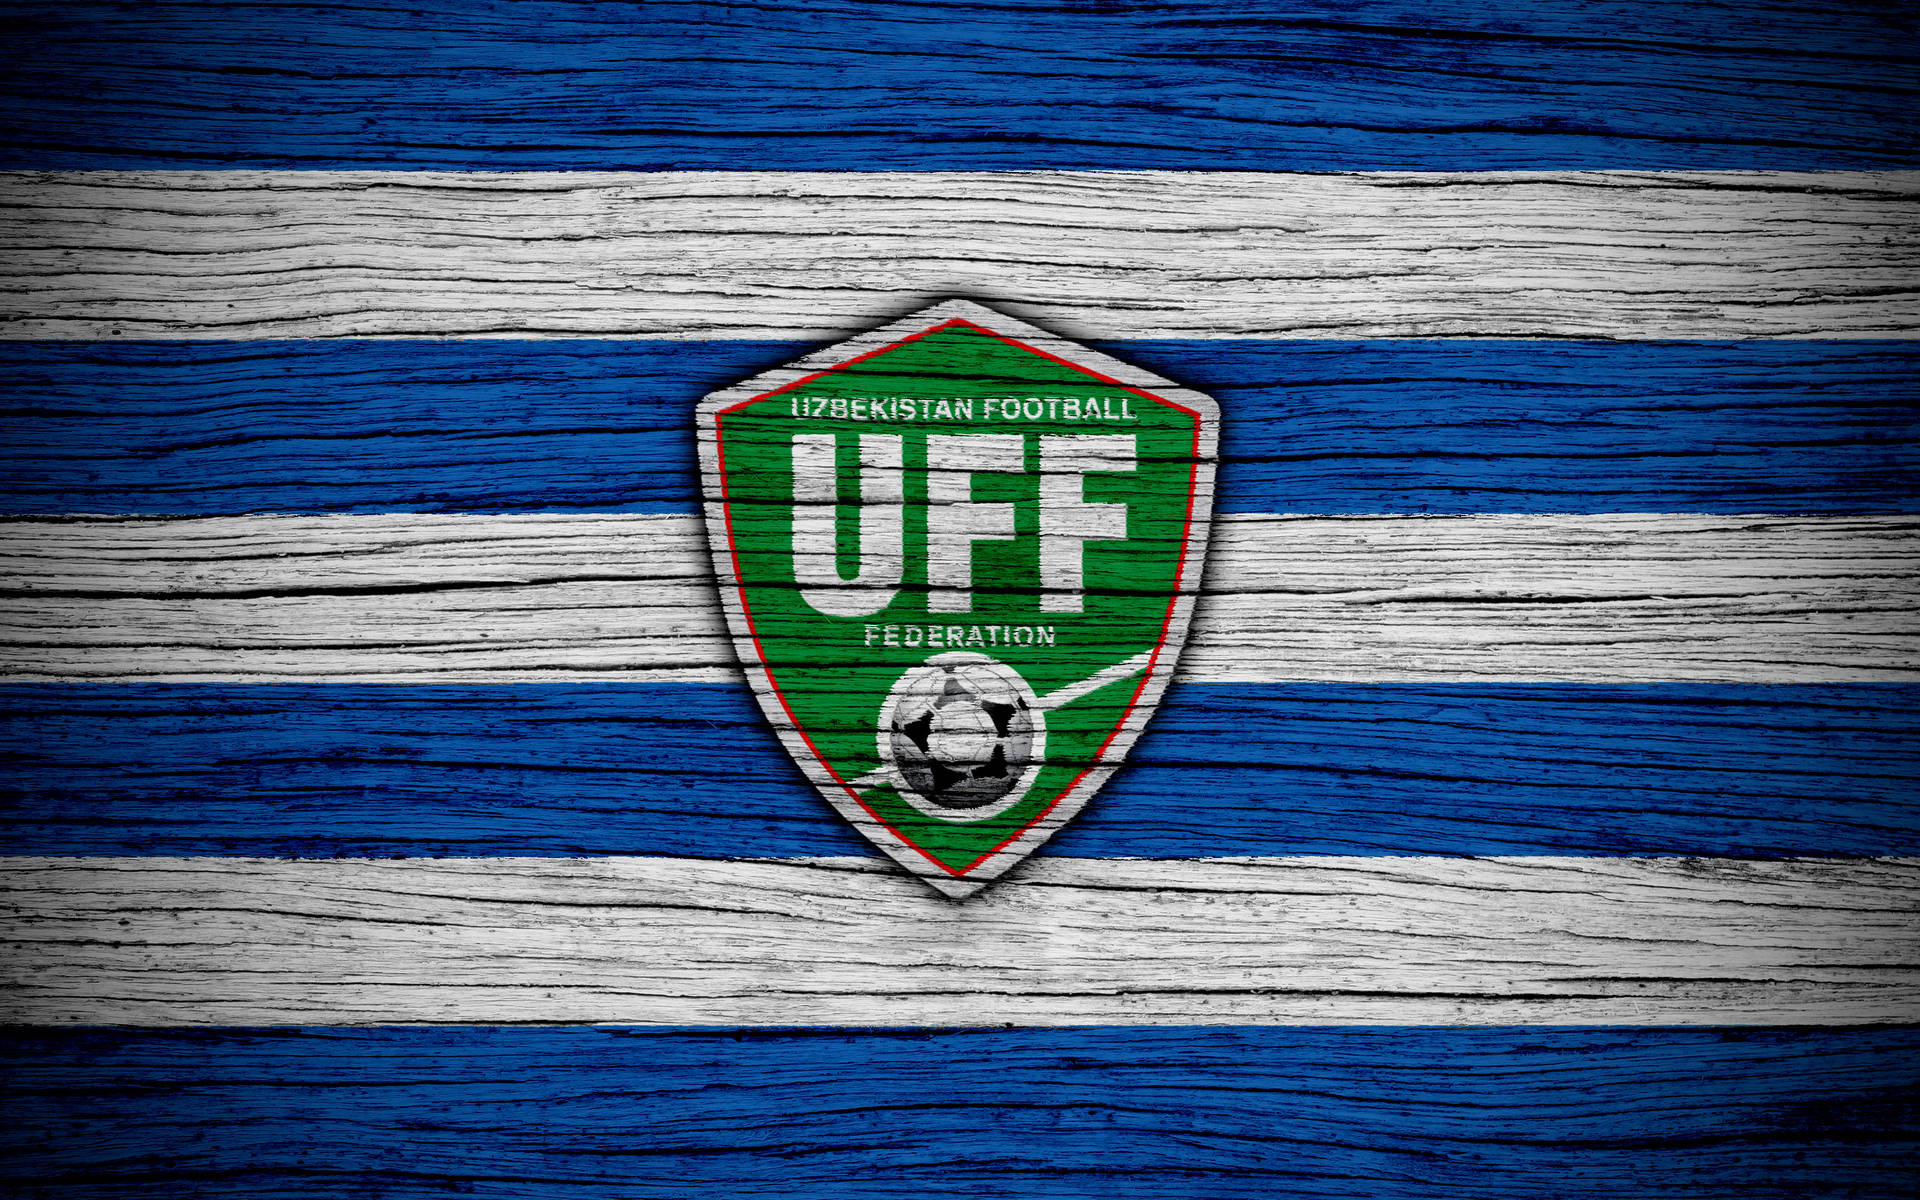 Uzbekistan Football Logo In Wooden Texture